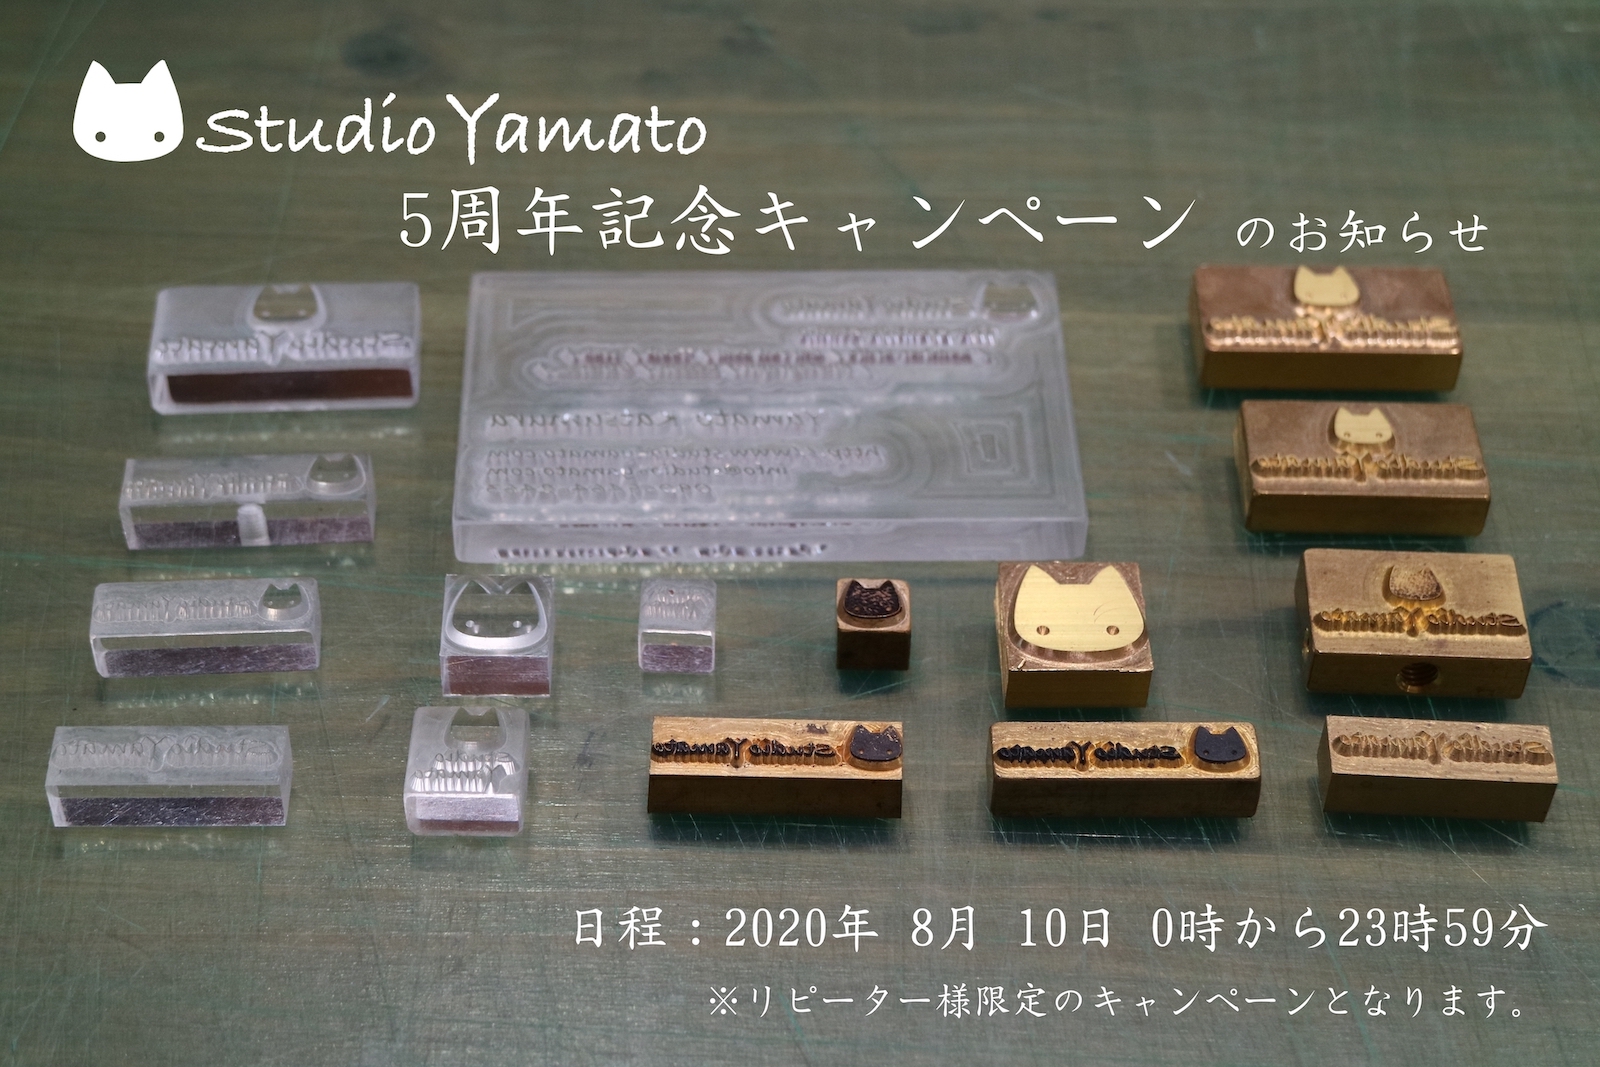 『Studio Yamato 5周年記念キャンペーン』の実施について